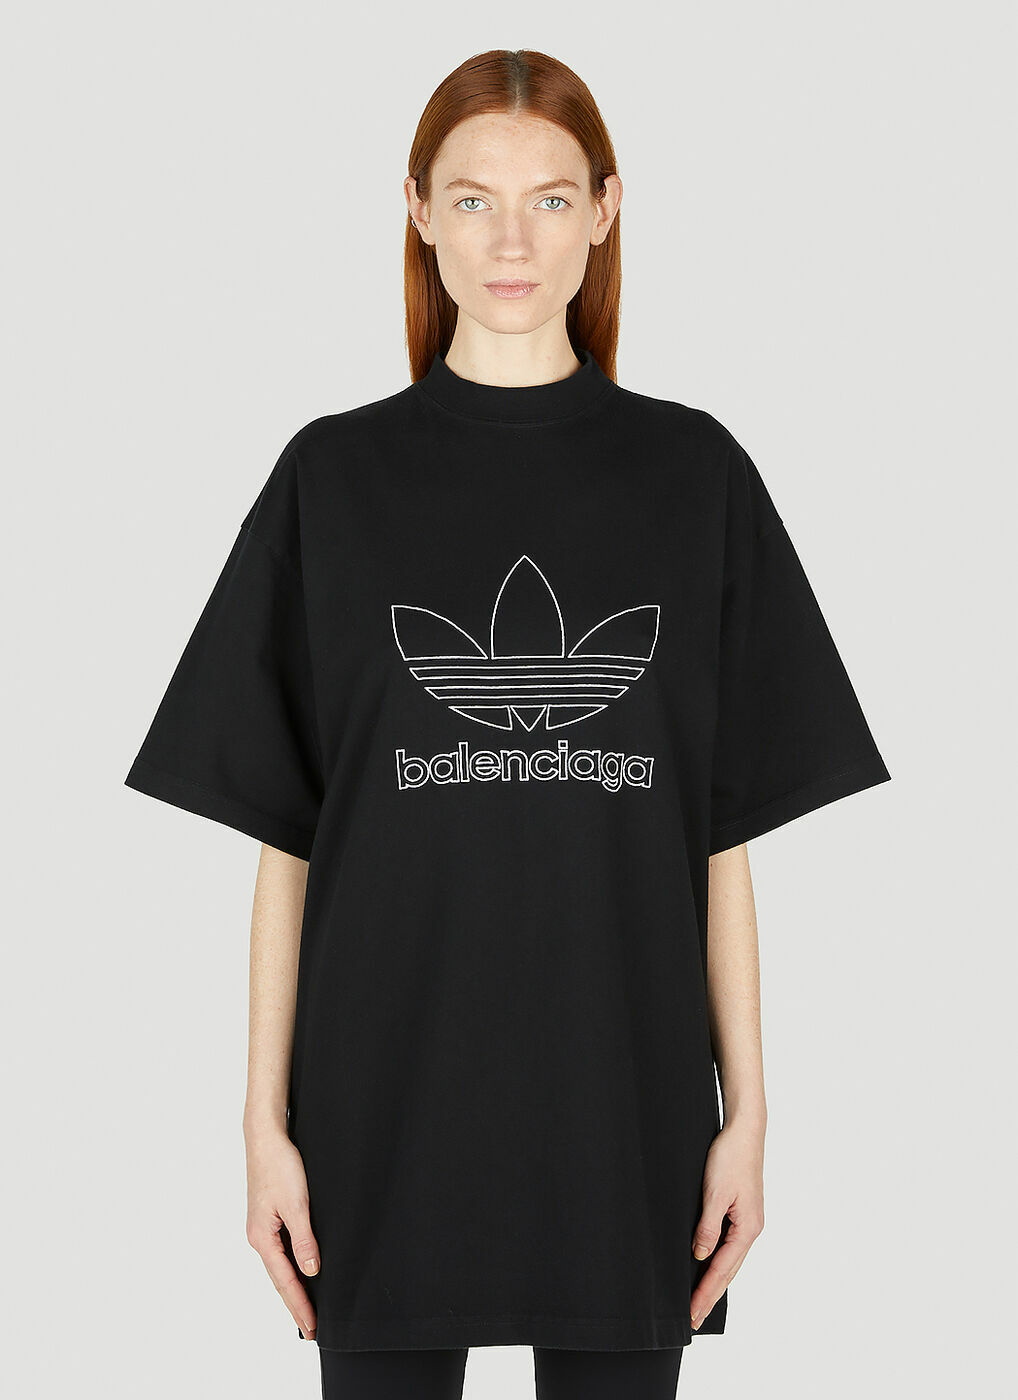 adidas x Balenciaga - Logo Print T-Shirt in Black adidas